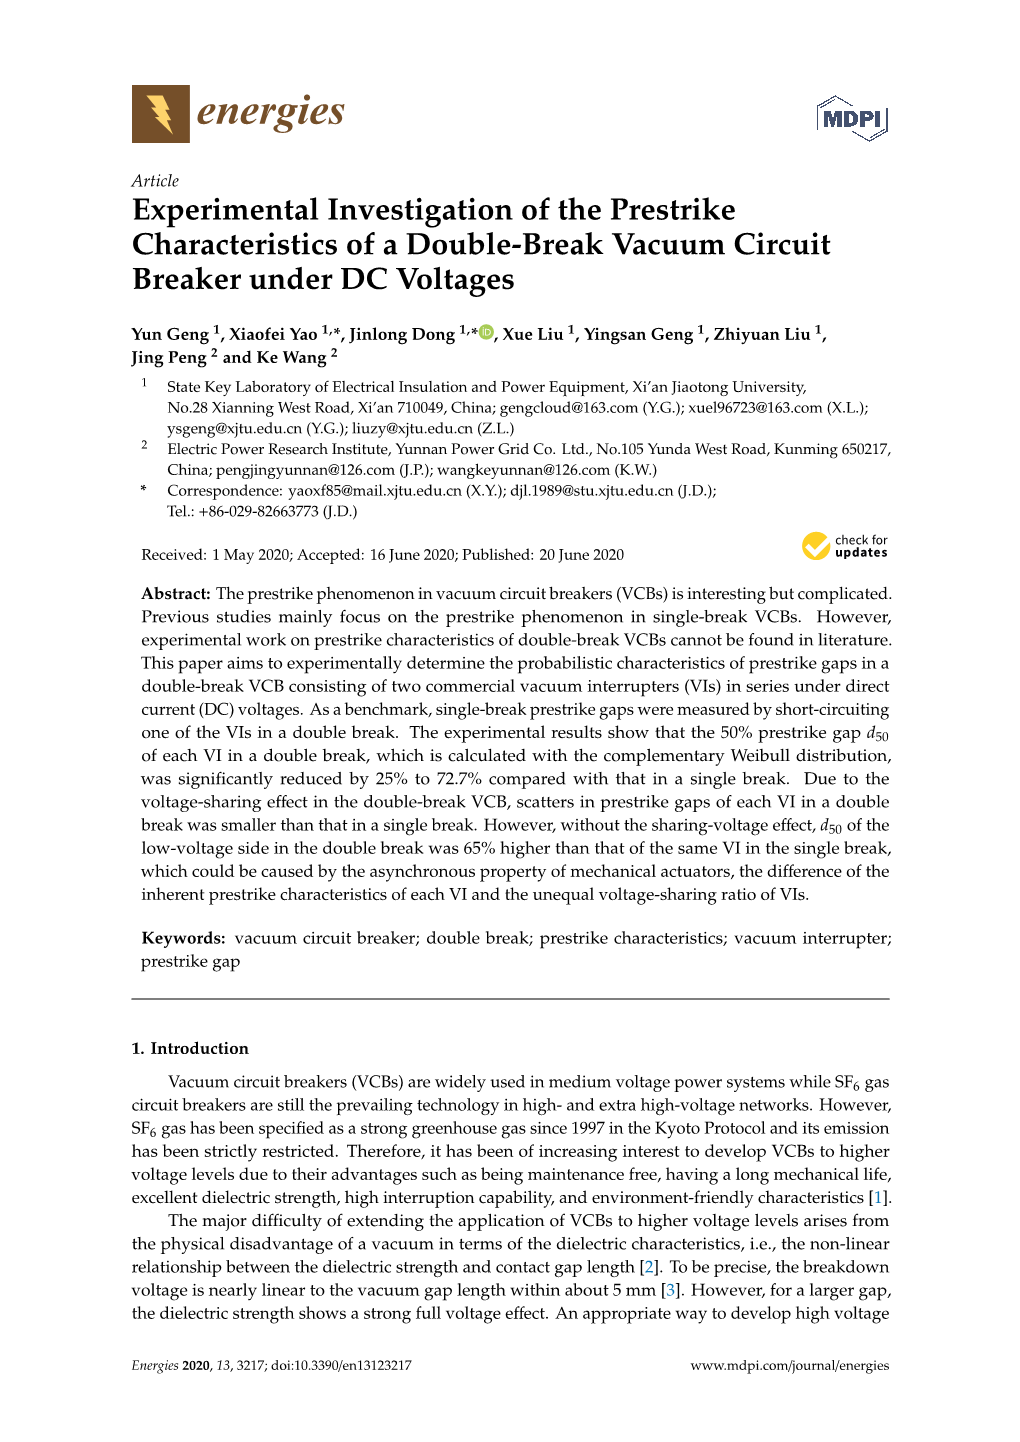 Experimental Investigation of the Prestrike Characteristics of a Double-Break Vacuum Circuit Breaker Under DC Voltages